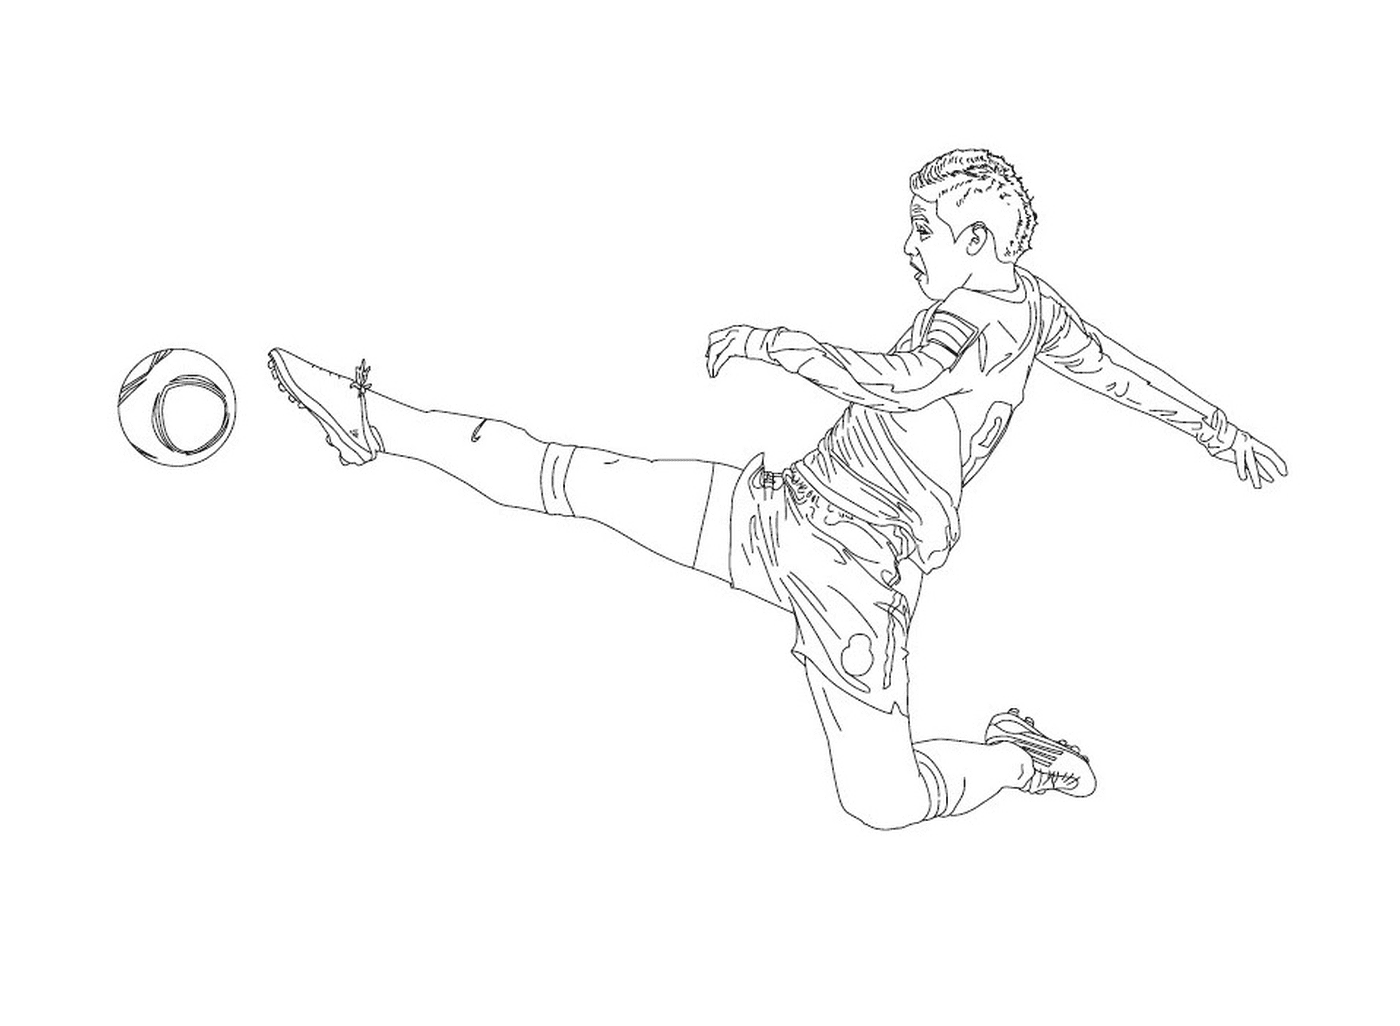 A boy kicking in a football